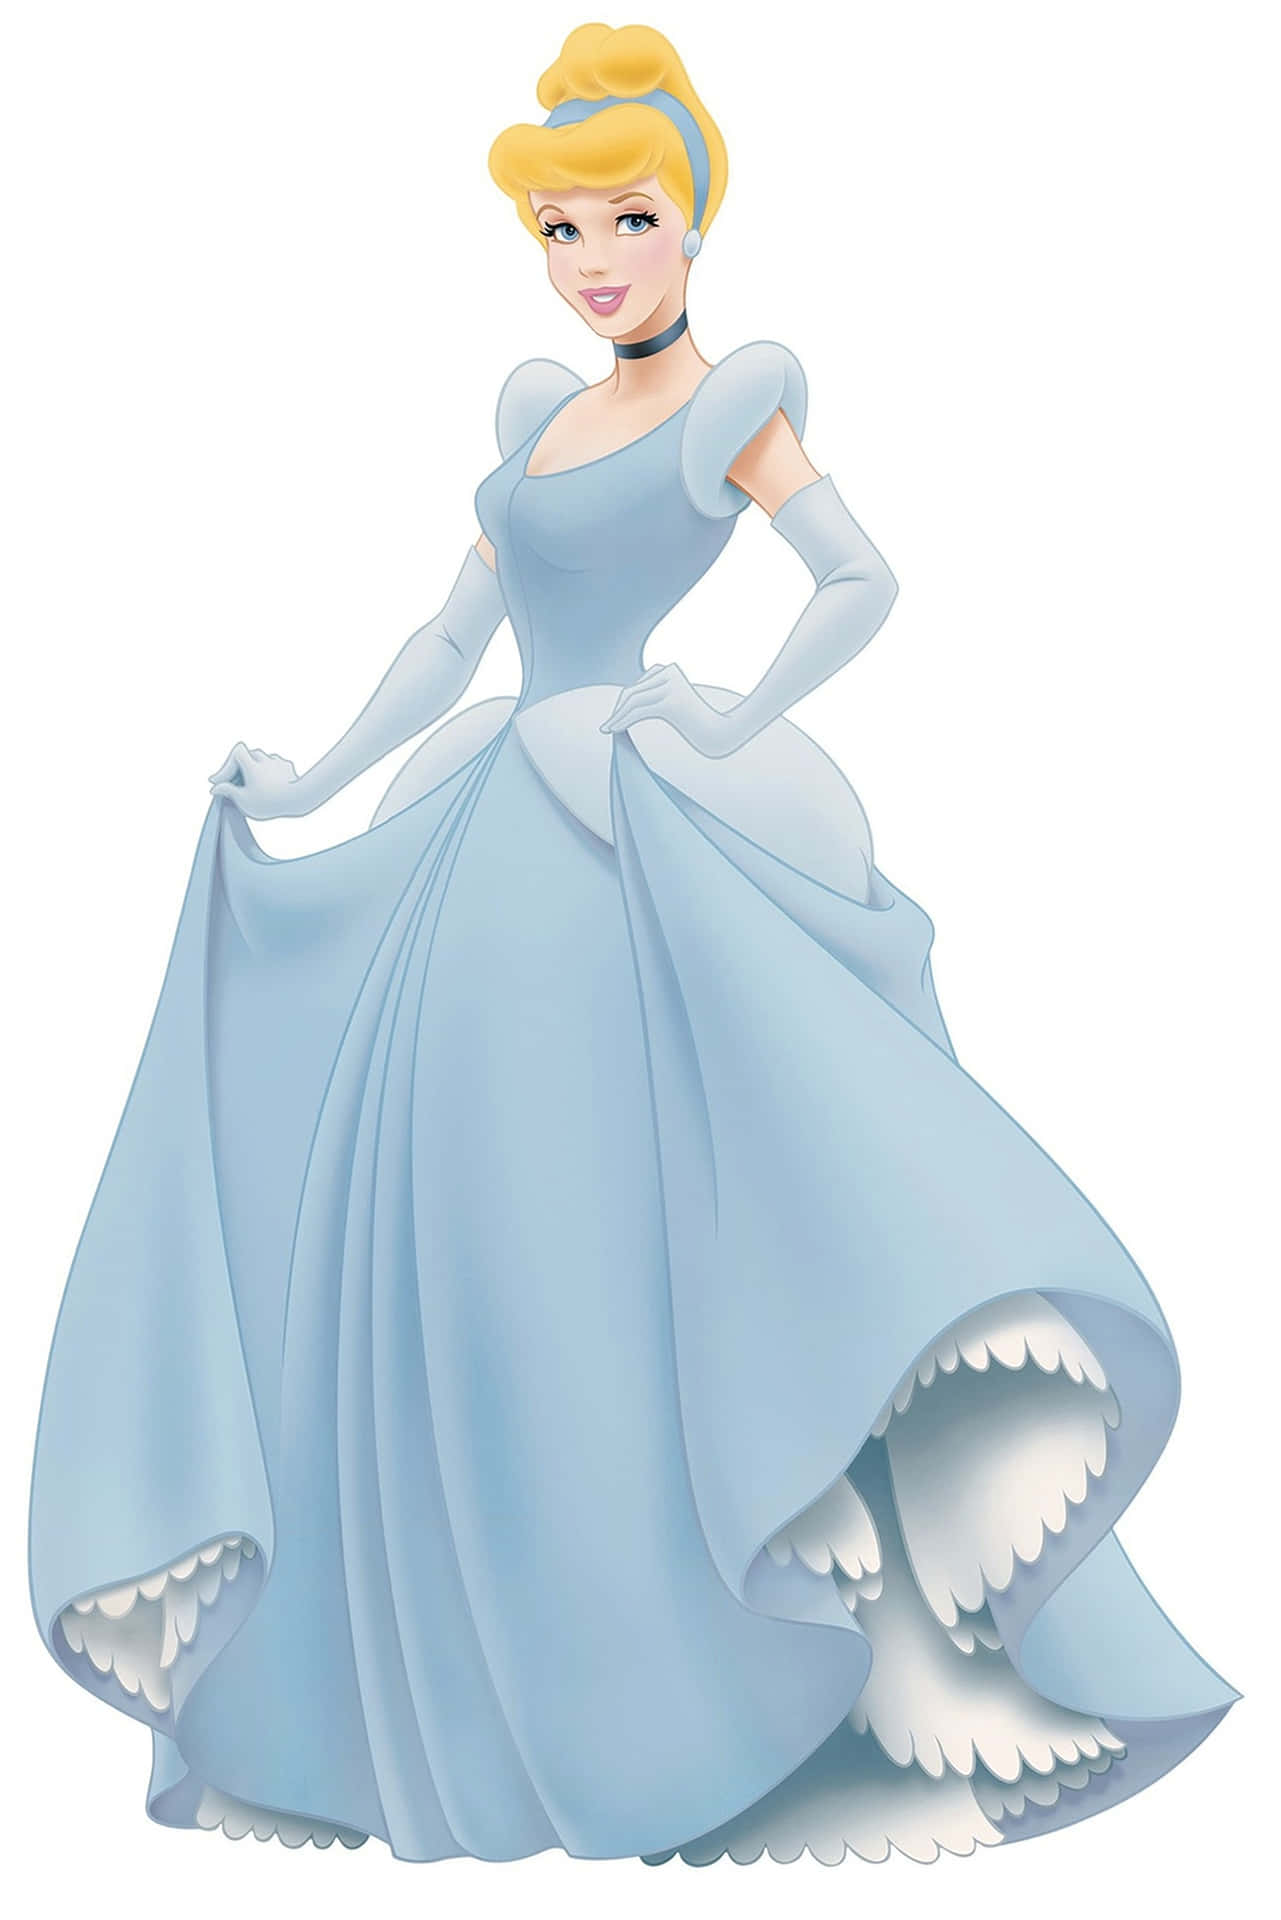 Cinderella steps into her future as a princess